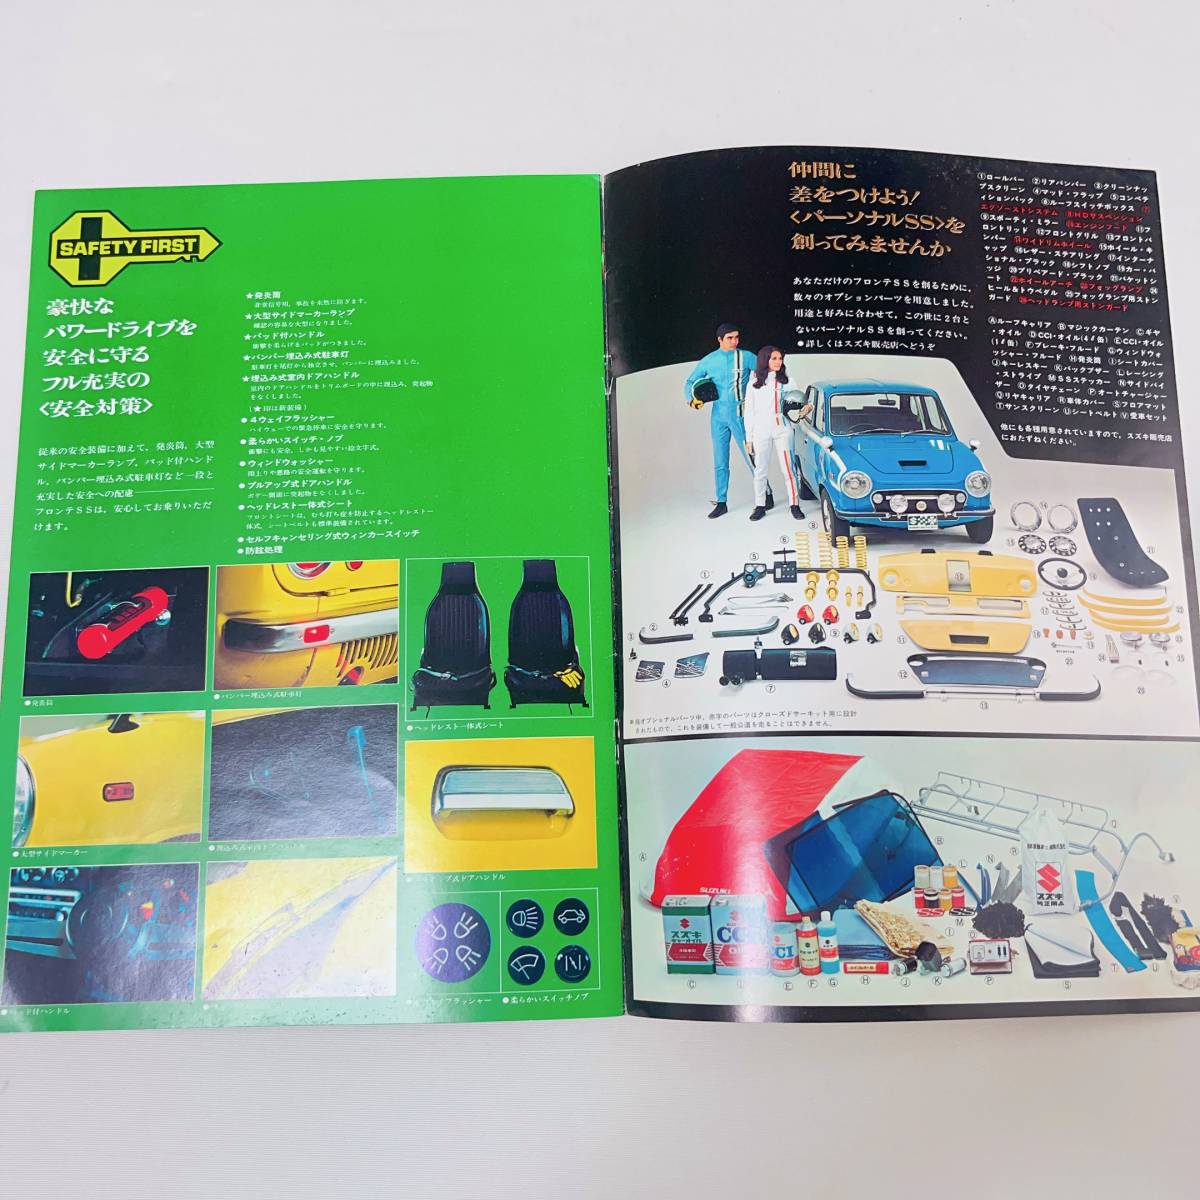  Suzuki Fronte SS каталог 12 страница превосходный товар 